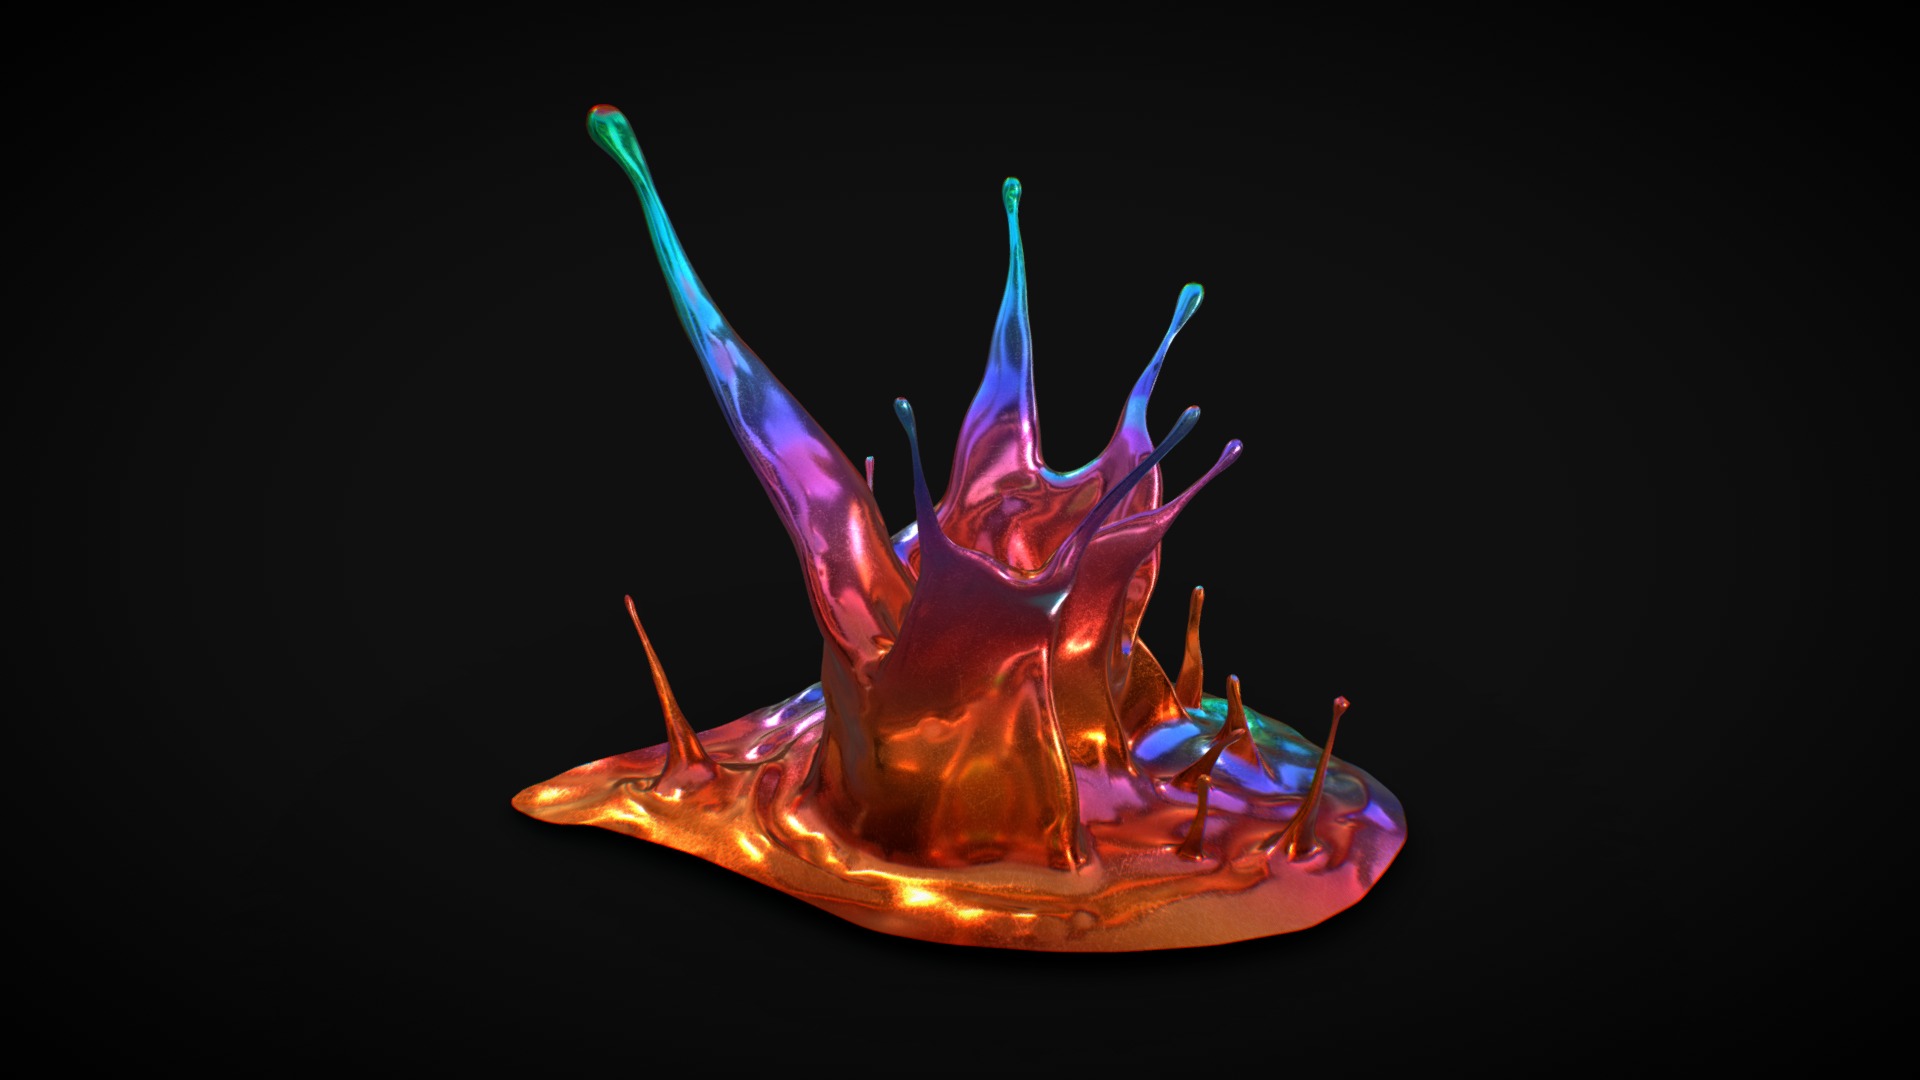 3D model Splash Study V1 - This is a 3D model of the Splash Study V1. The 3D model is about a lit up candle.